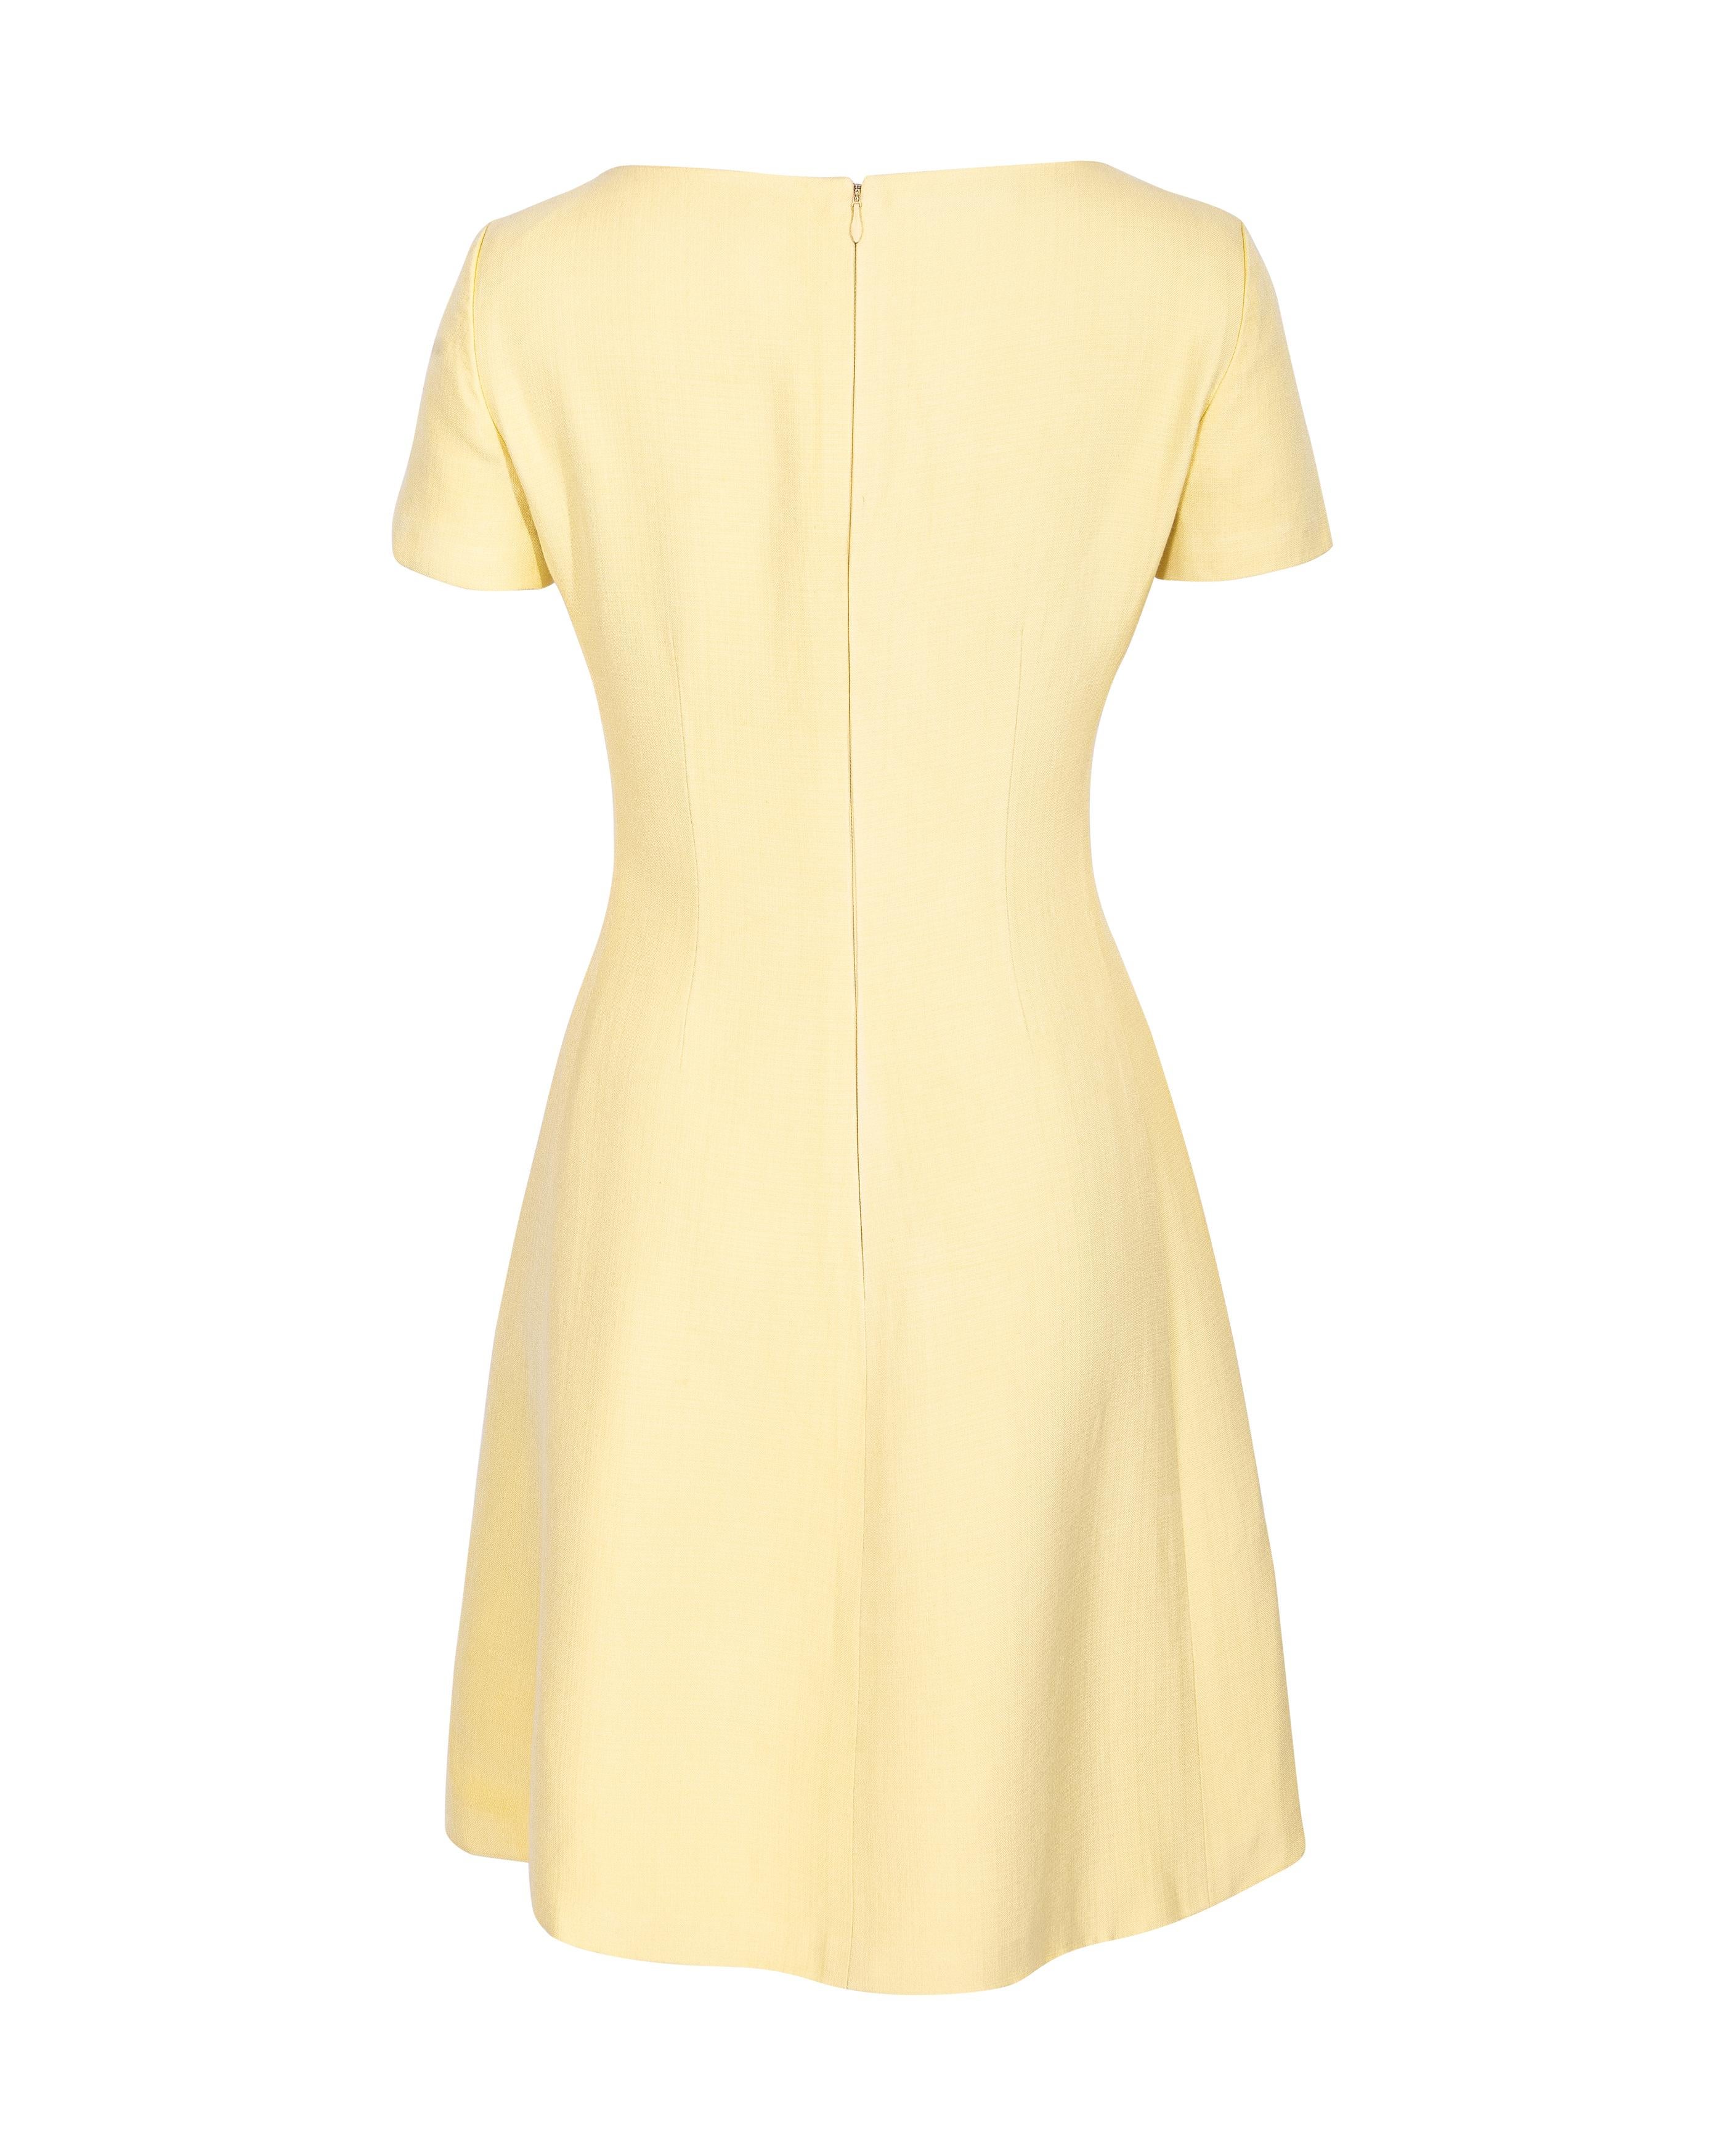 S/S 1992 Prada by Miuccia Prada Butter Yellow Short Sleeve Mini Dress 1